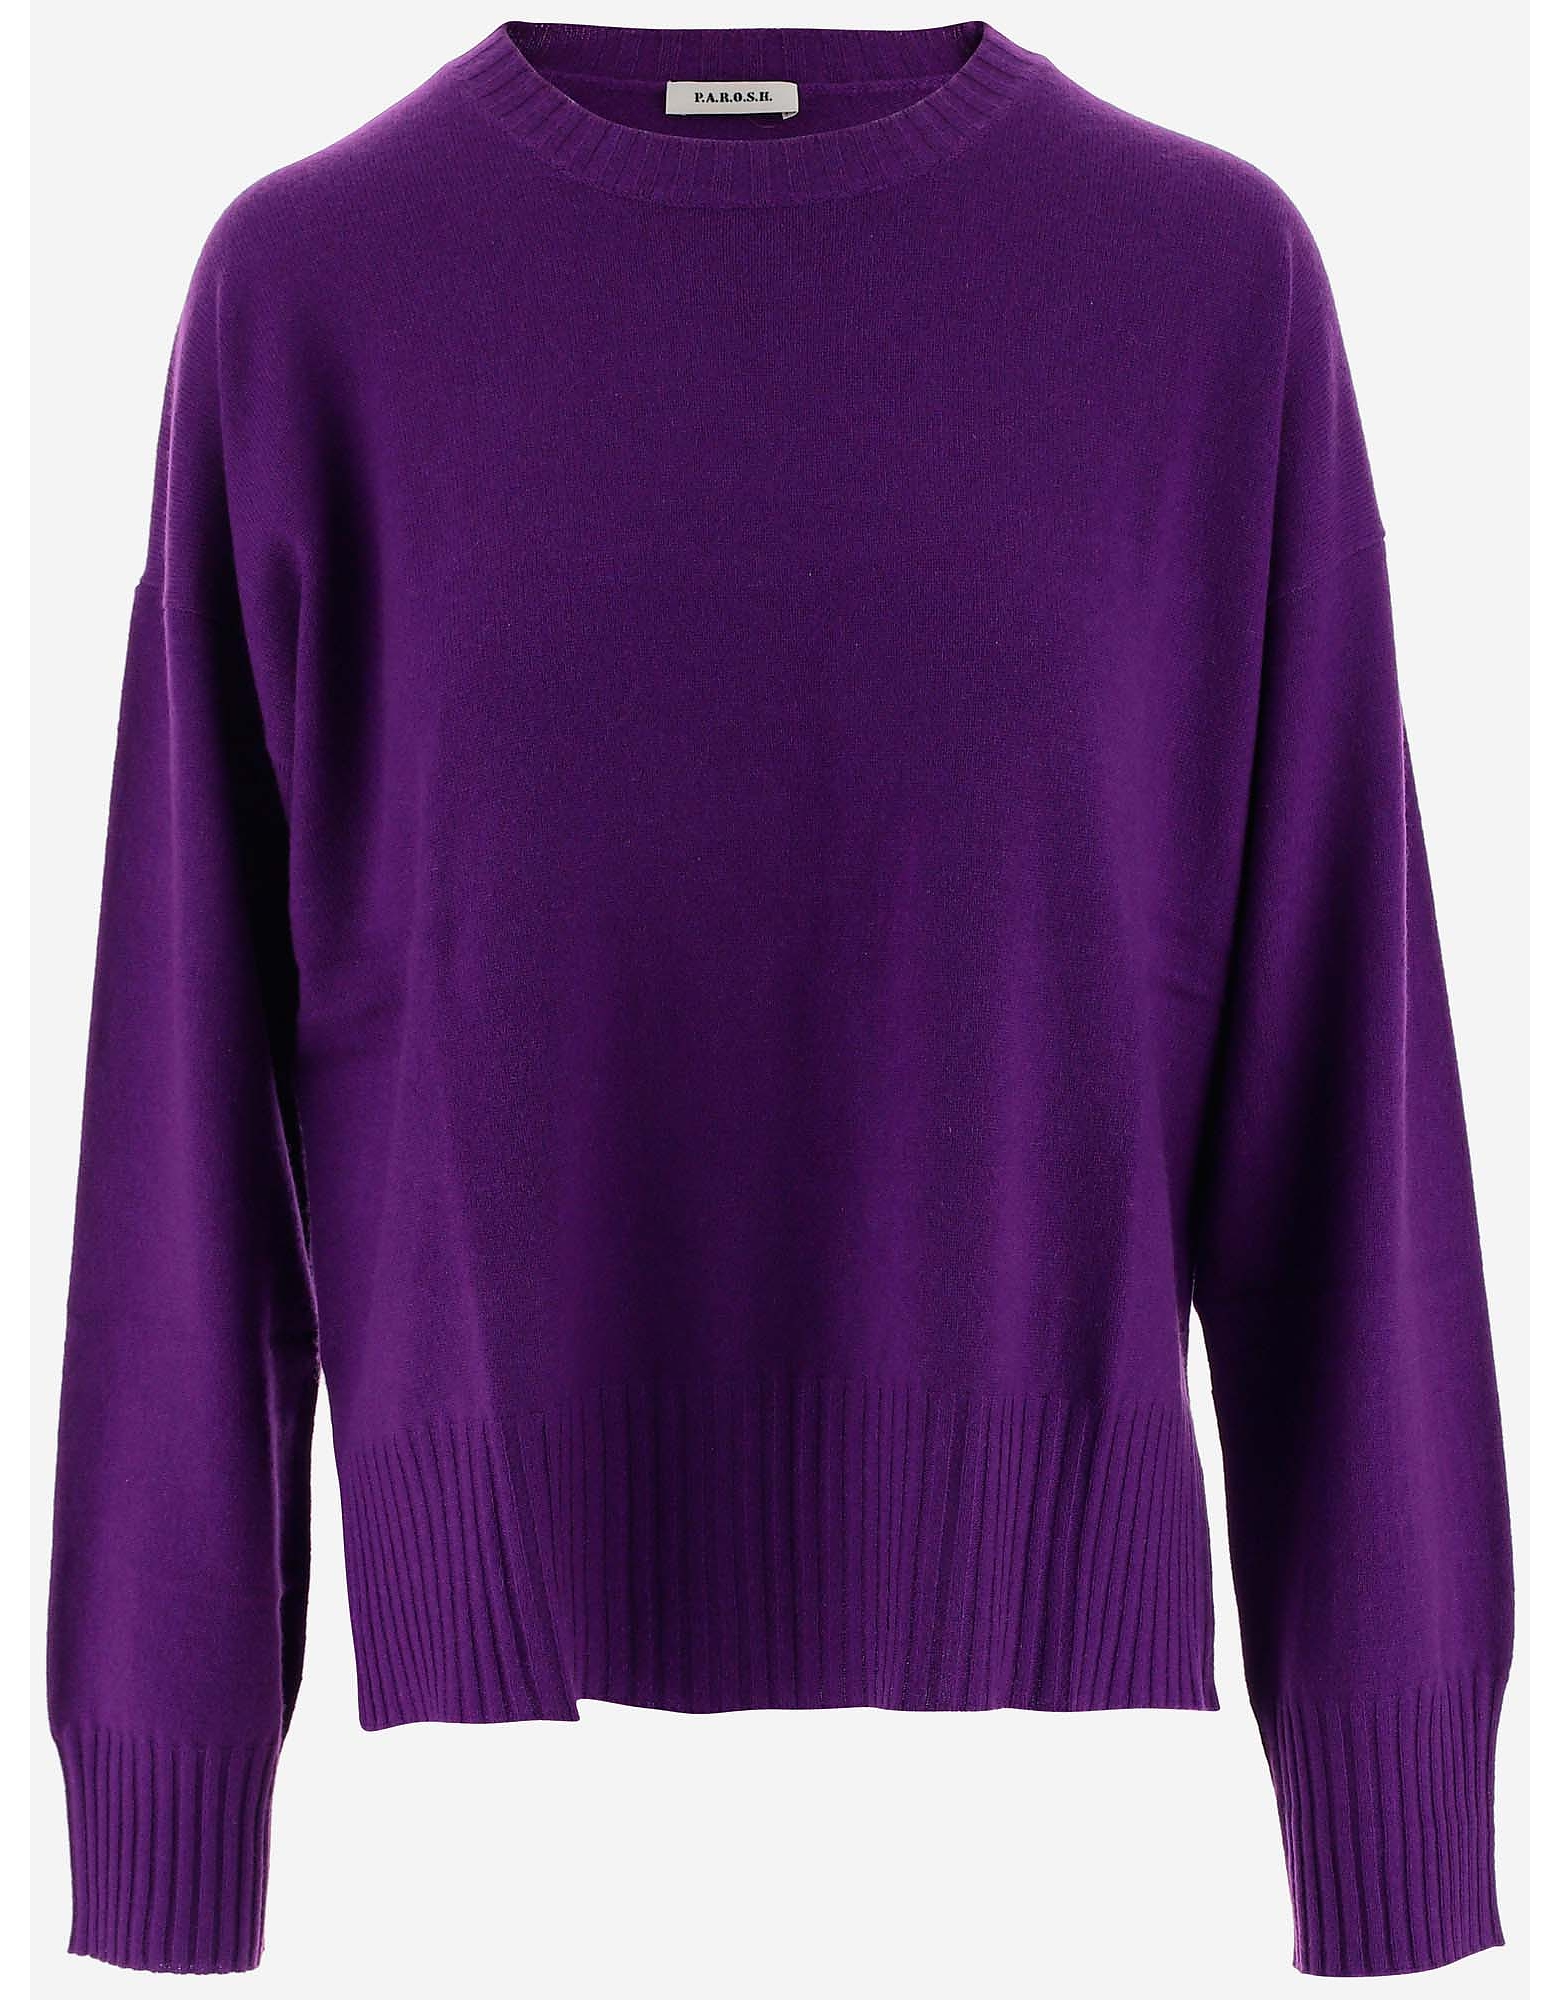 Parosh Designer Knitwear, Purple Cashmere Women's Sweater